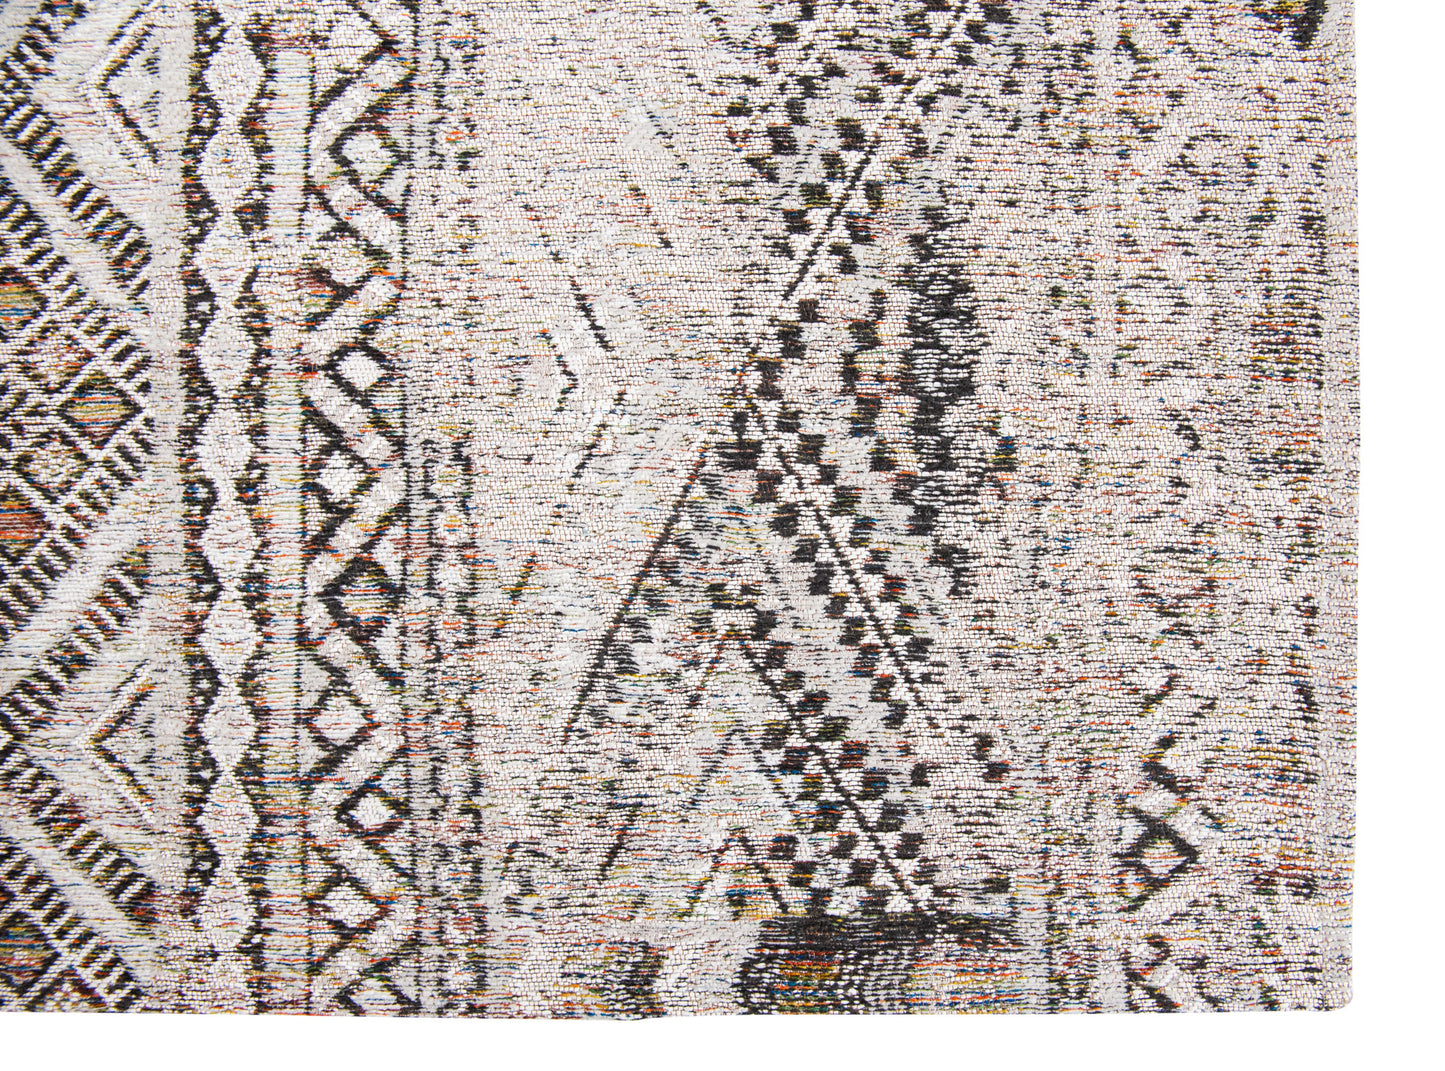 KI-101: Jacquard rugs